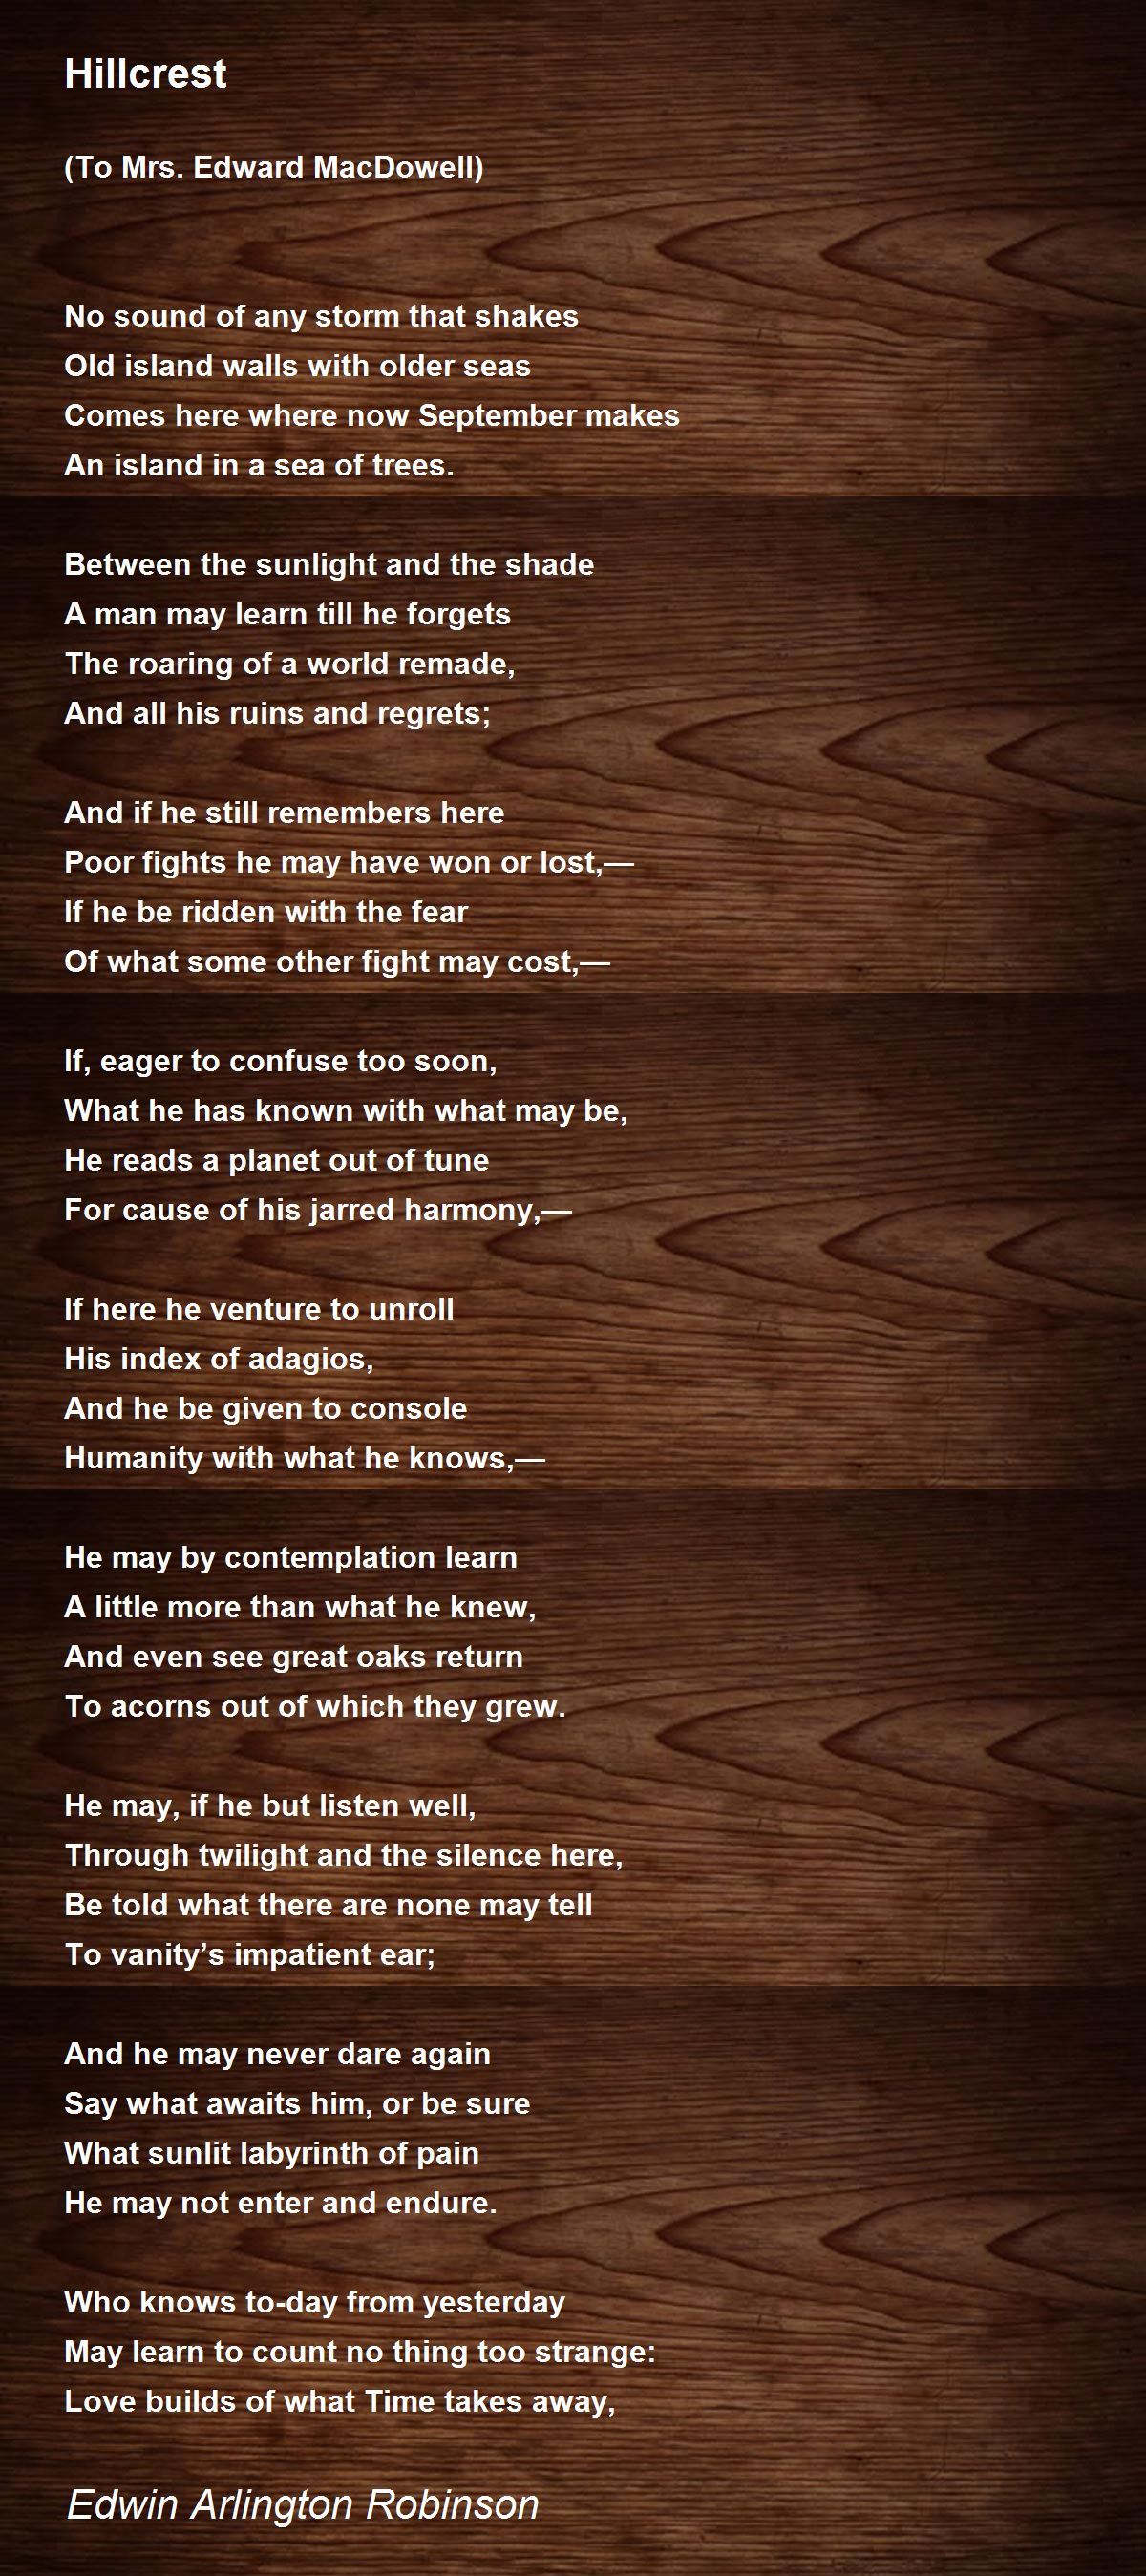 Arlington Robinsons poem Richard Cory - Essay Example